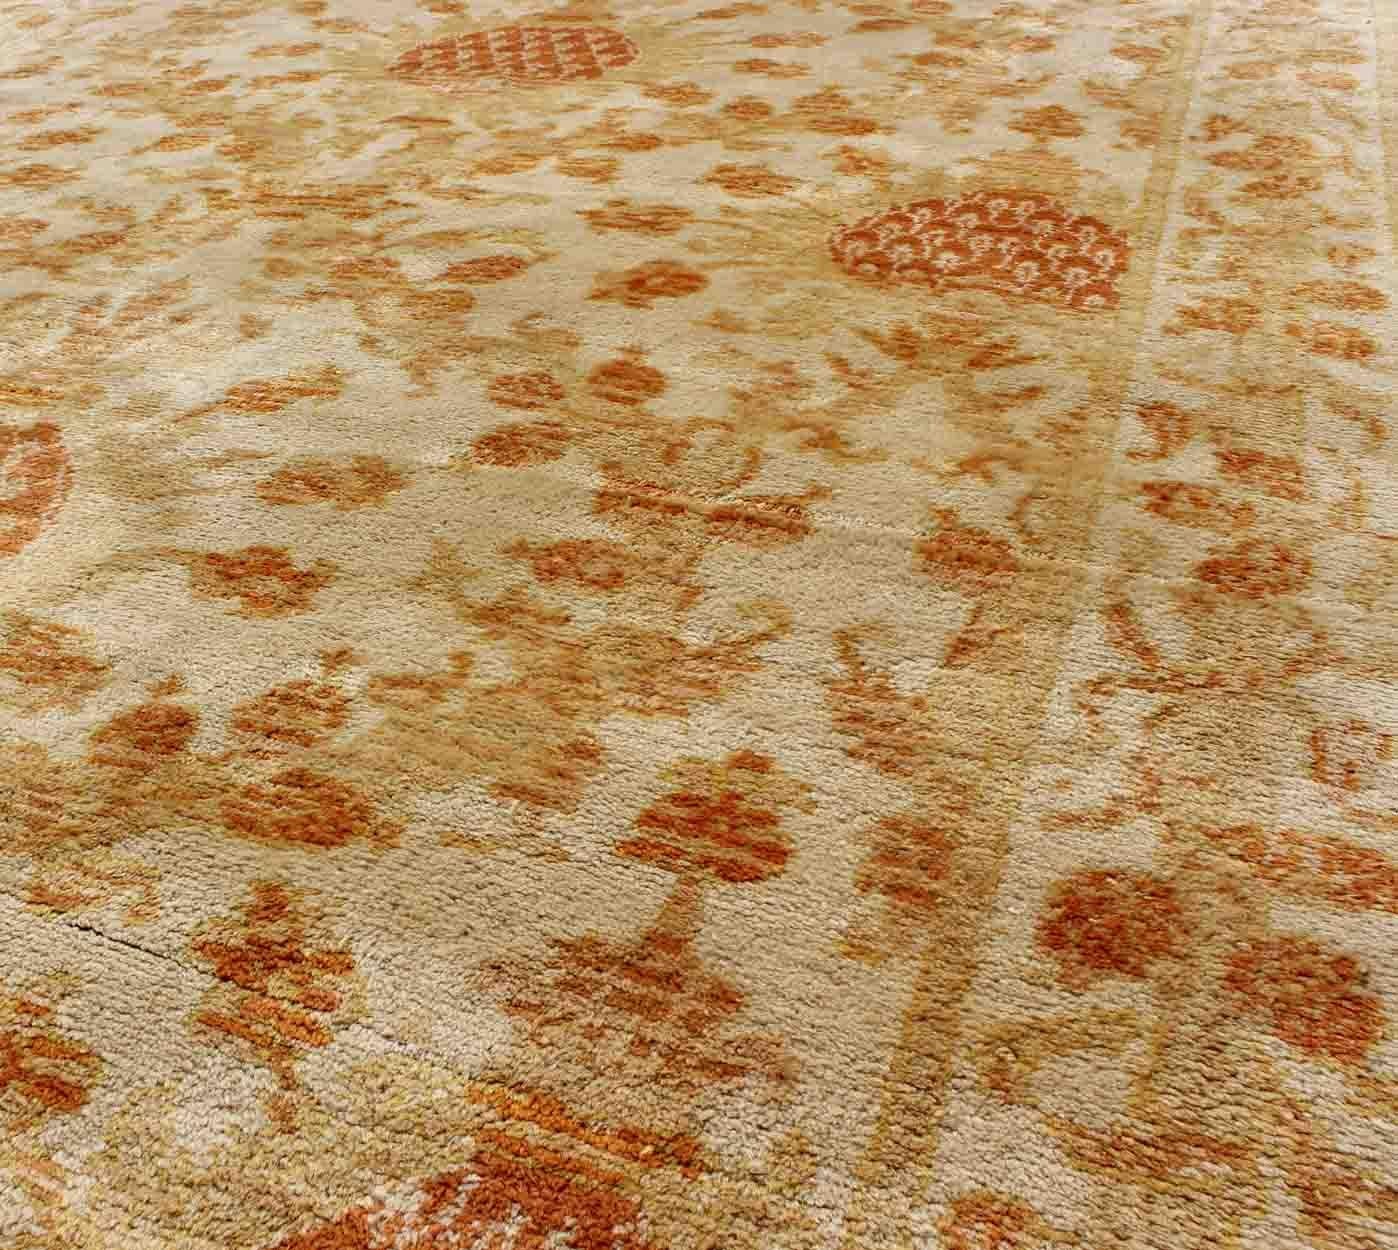 Antique Spanish European Carpet with Pineapple Design in Gold, Cream & Tangerine In Excellent Condition For Sale In Atlanta, GA